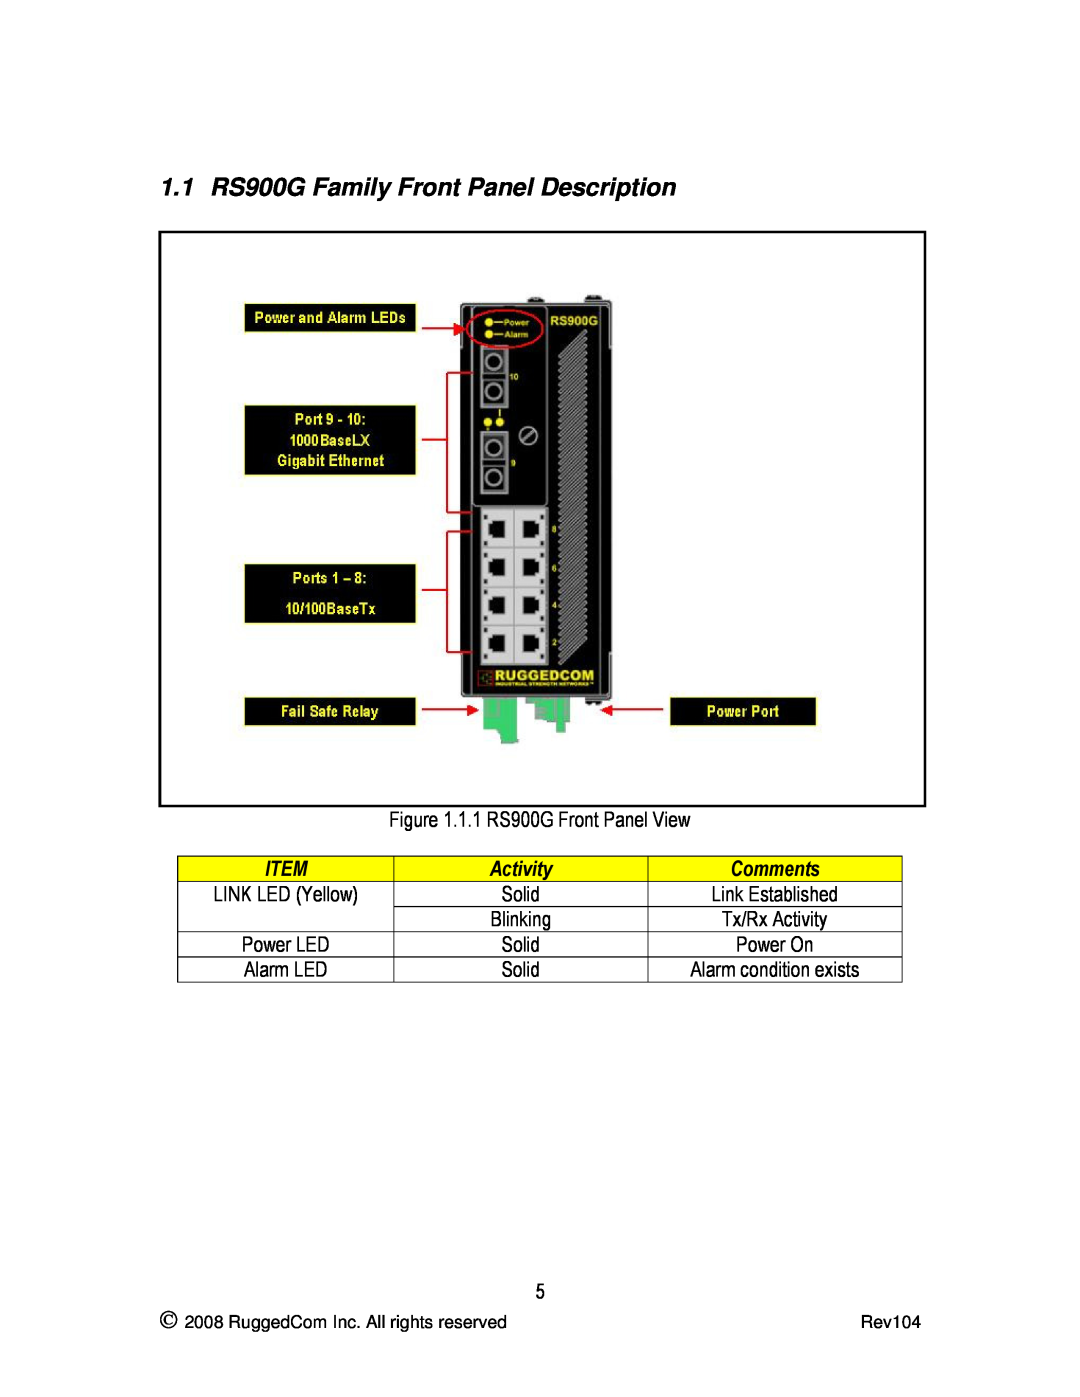 RuggedCom manual 1.1 RS900G Family Front Panel Description, 1.1 RS900G Front Panel View, Activity, Comments 